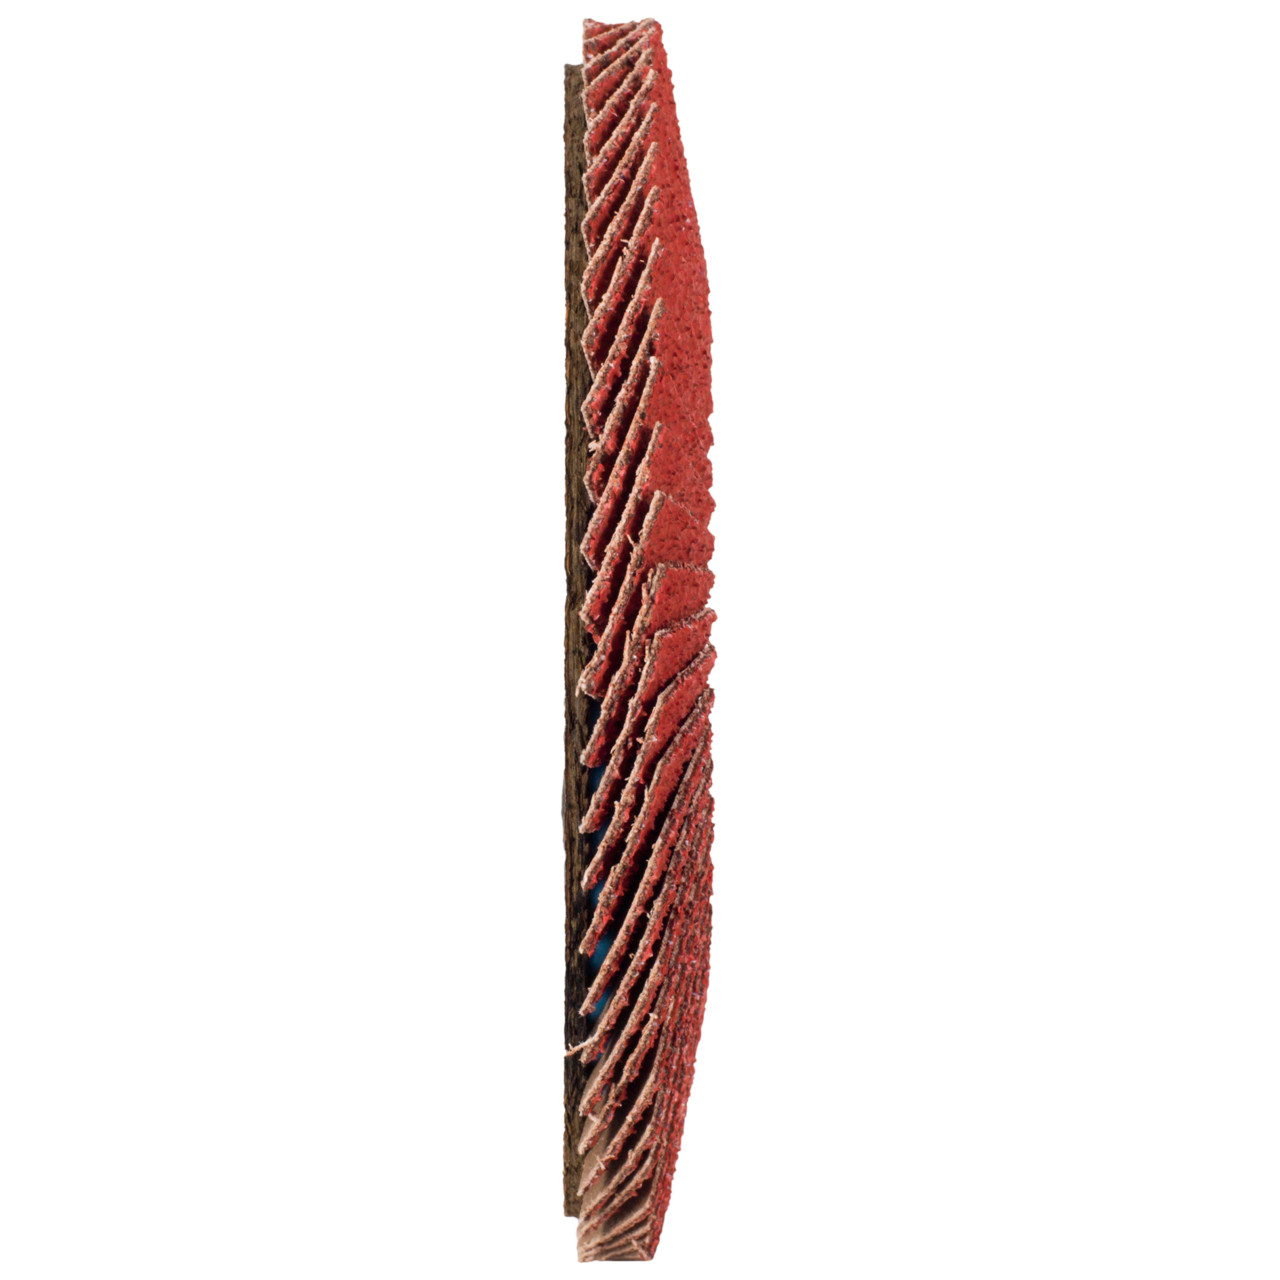 Tyrolit Gekartelde borgring DxH 178x22,23 CERABOND gekartelde borgring voor roestvrij staal, P40, vorm: 27A - geslingerde versie (glasvezeldragerhuisversie), Art. 34166166